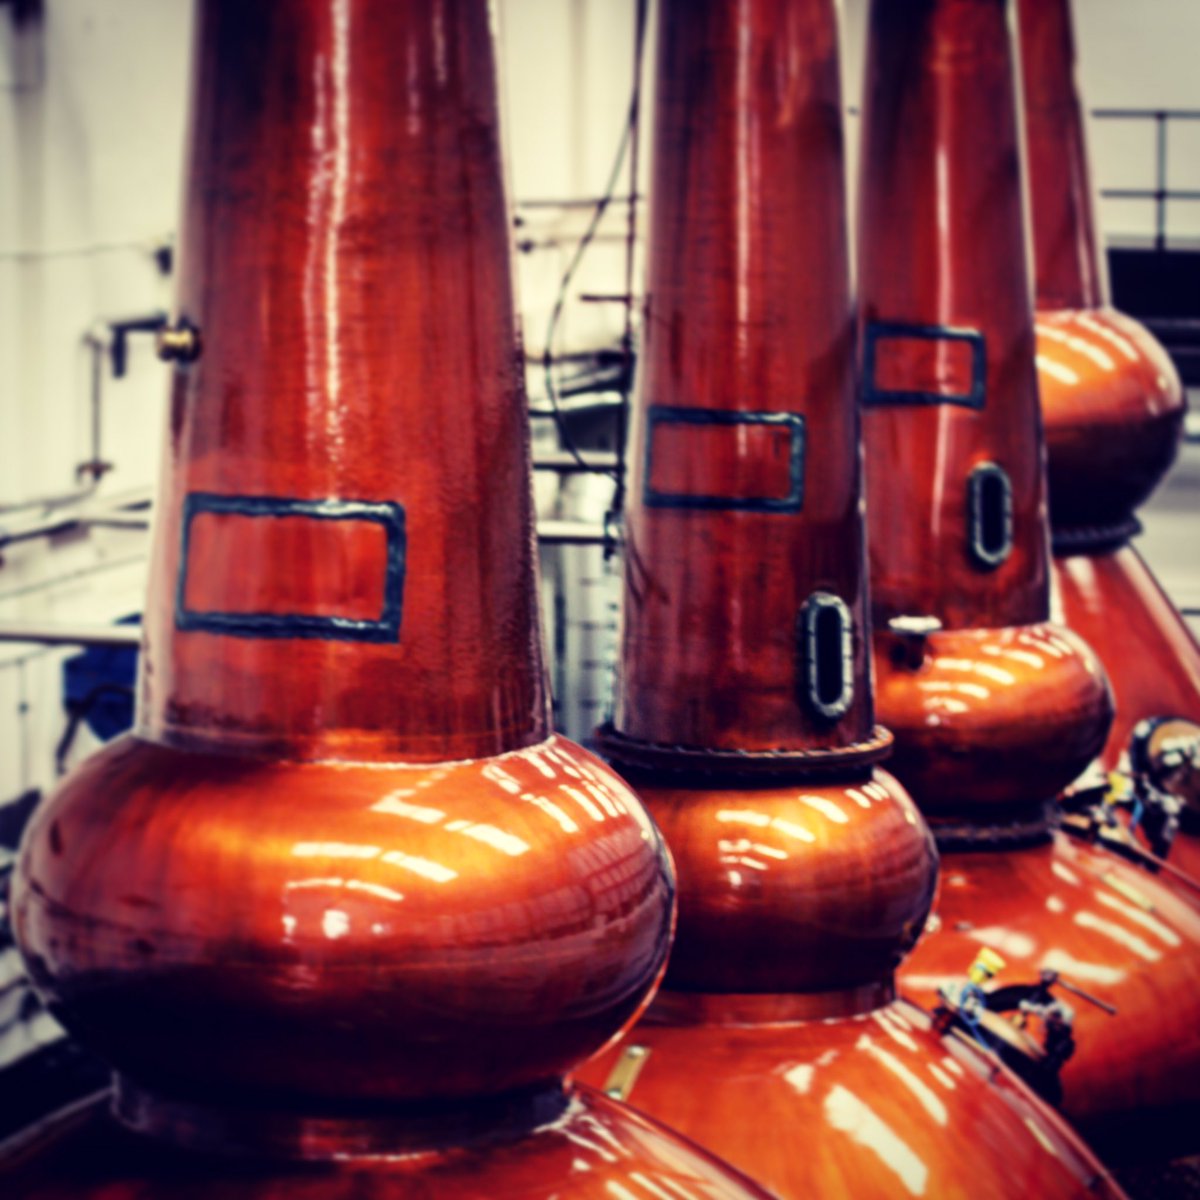 Inside Mortlach Distillery today. #lovescotch #mortlach #scotch #speyside #spiritofspeyside